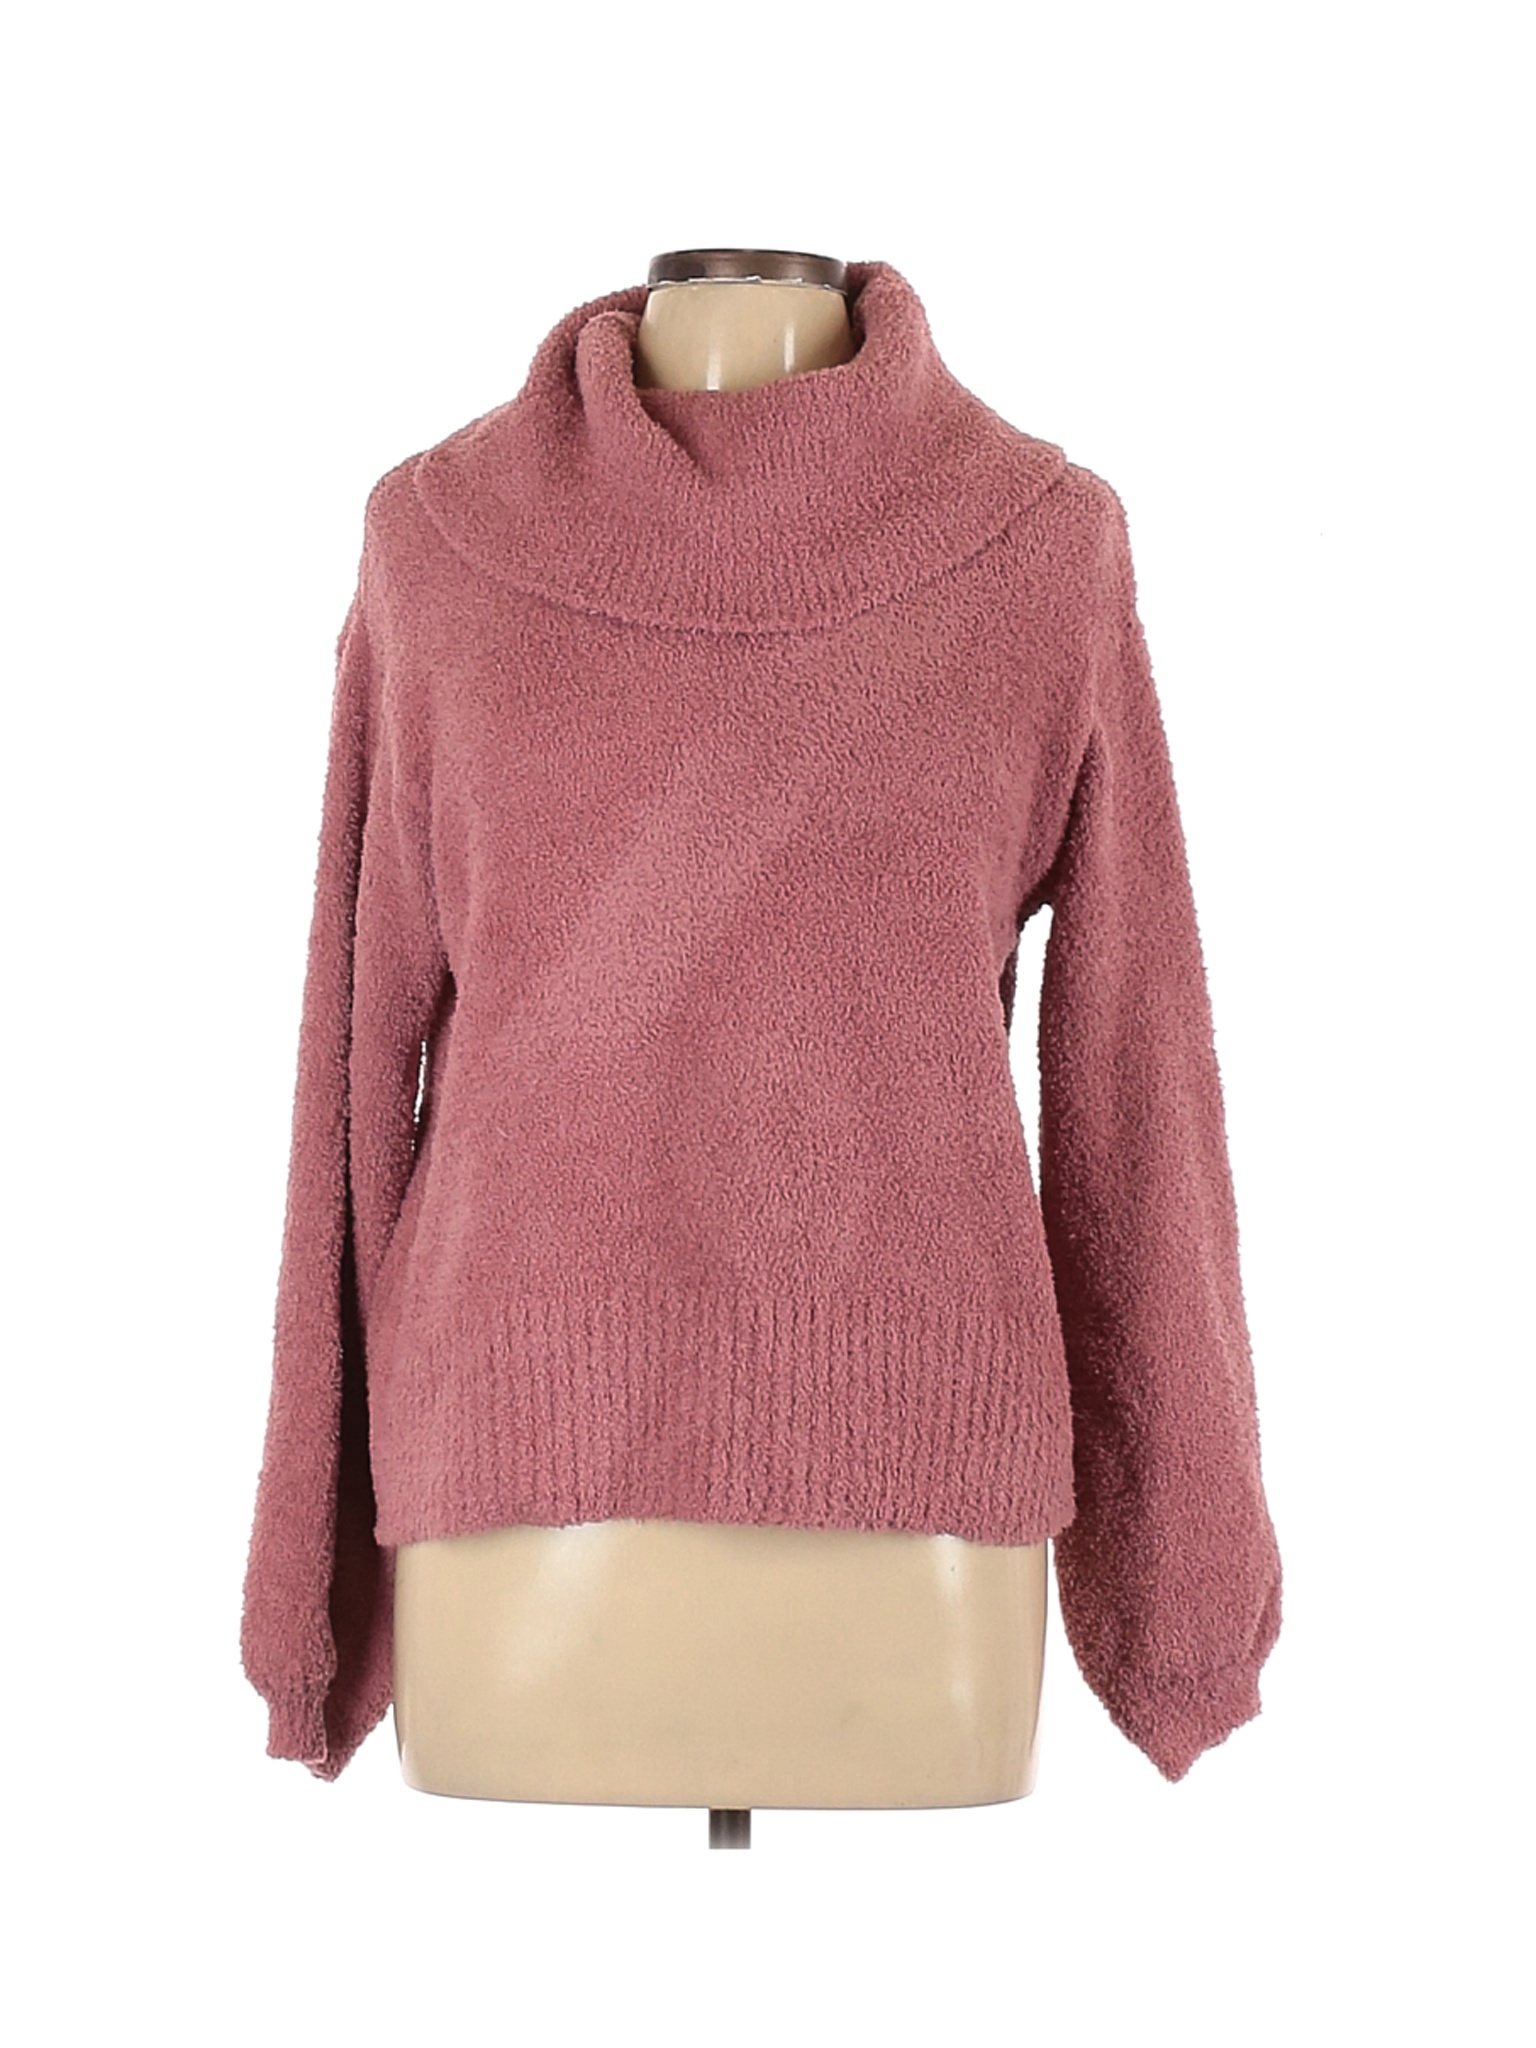 Jessica Simpson Women Pink Pullover Sweater M | eBay